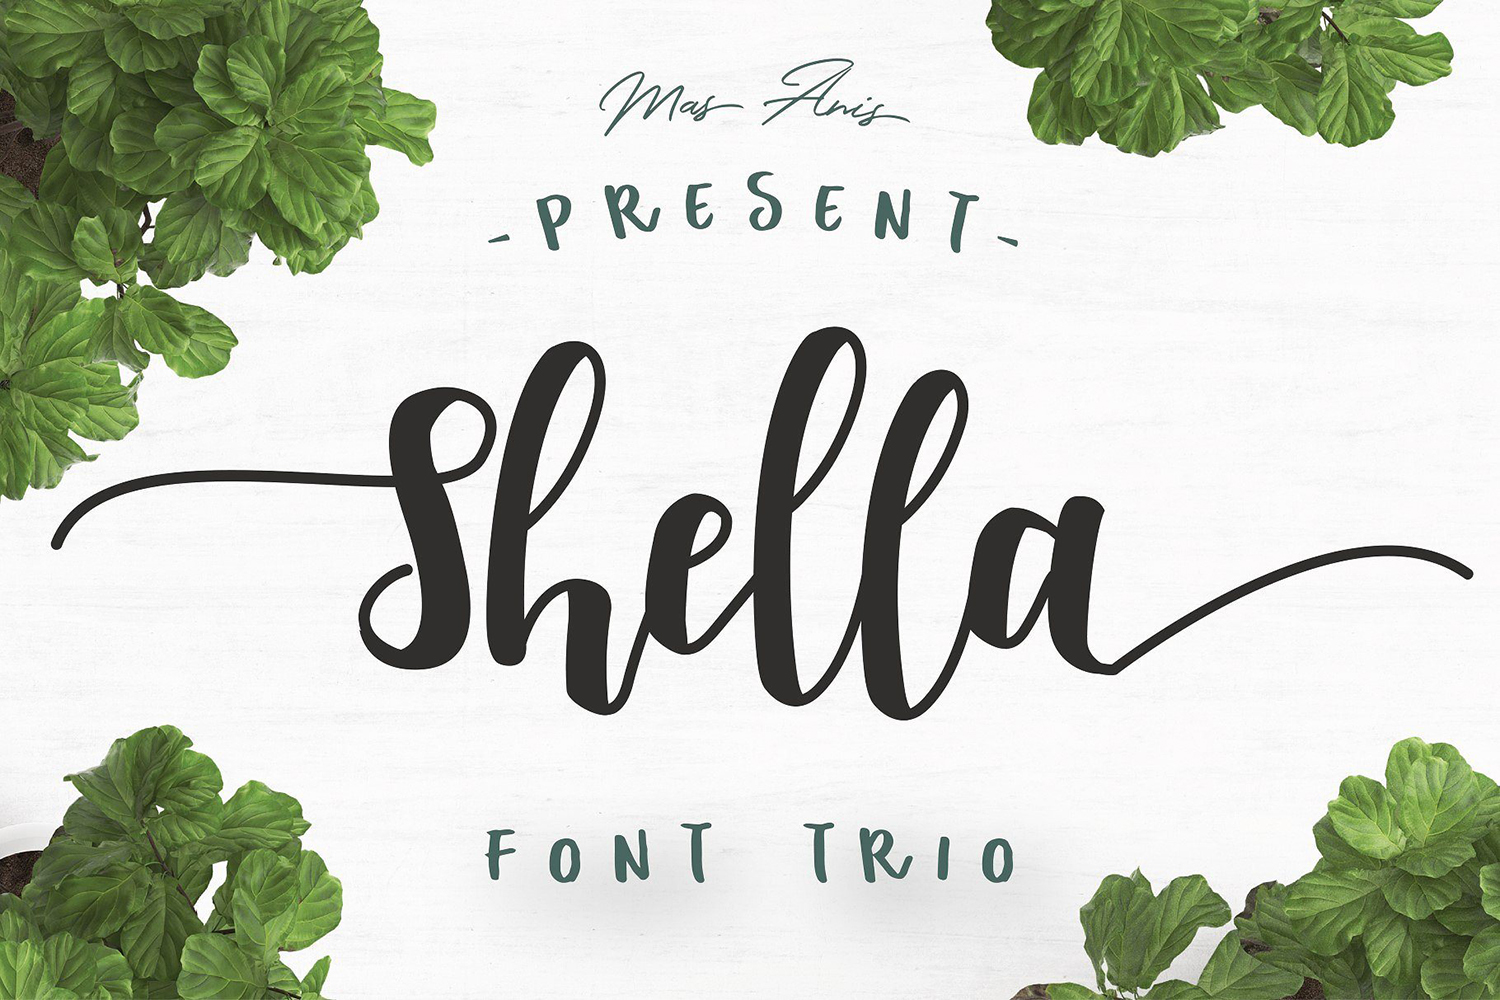 Shella Free Font